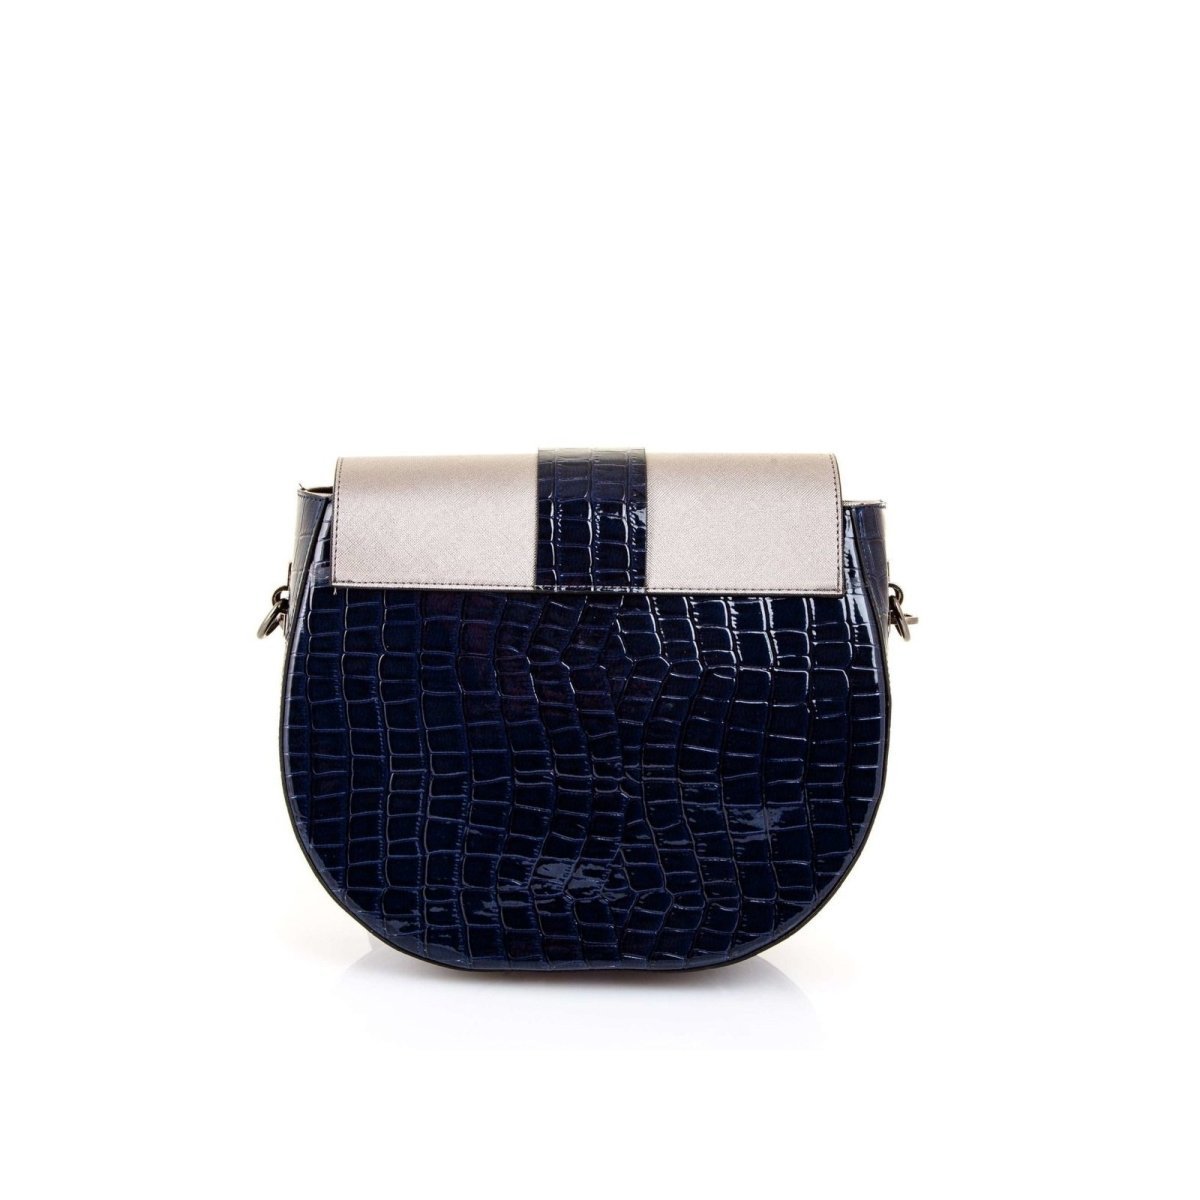 D Shape Shoulder Bag with Croc Effect Design - Ozzell London